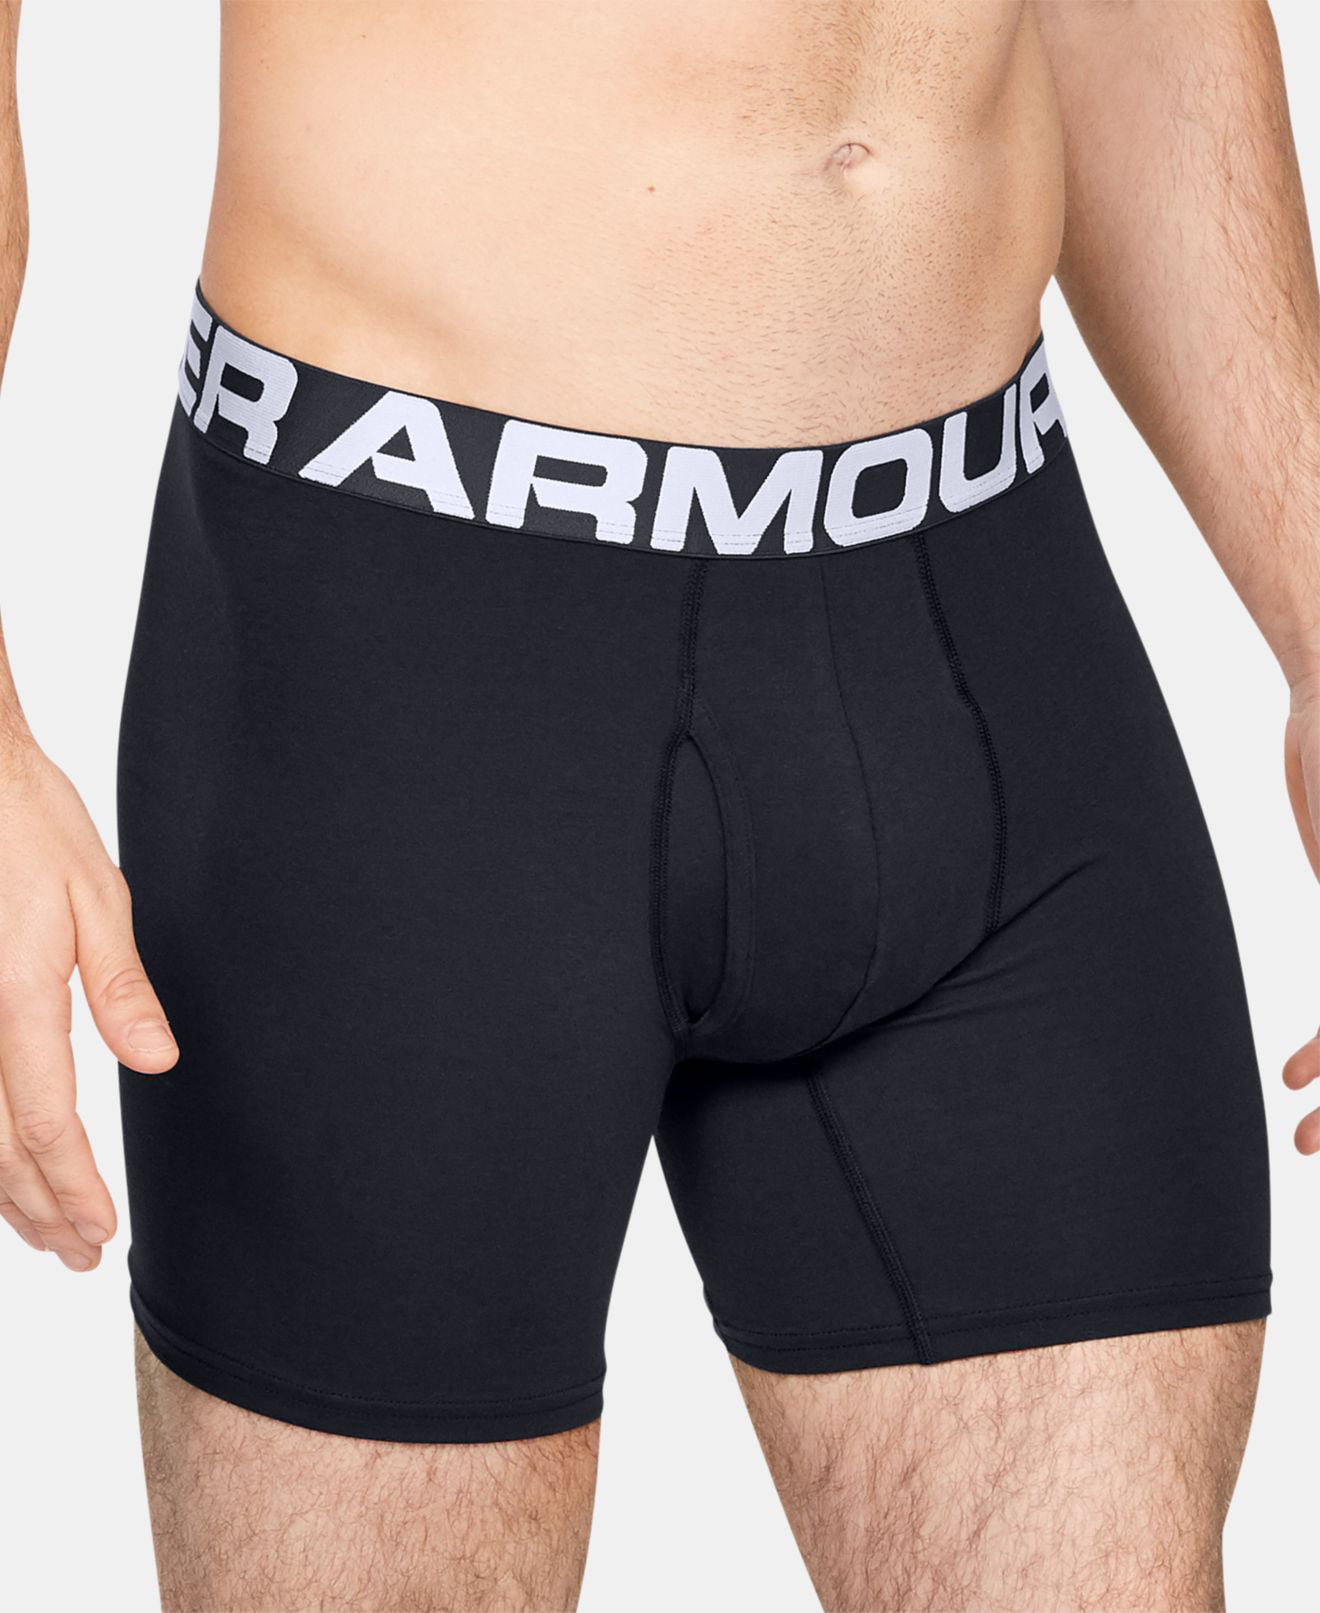 Under Armour Mens Underwear Gray Large 3 Pack Boxer Briefs